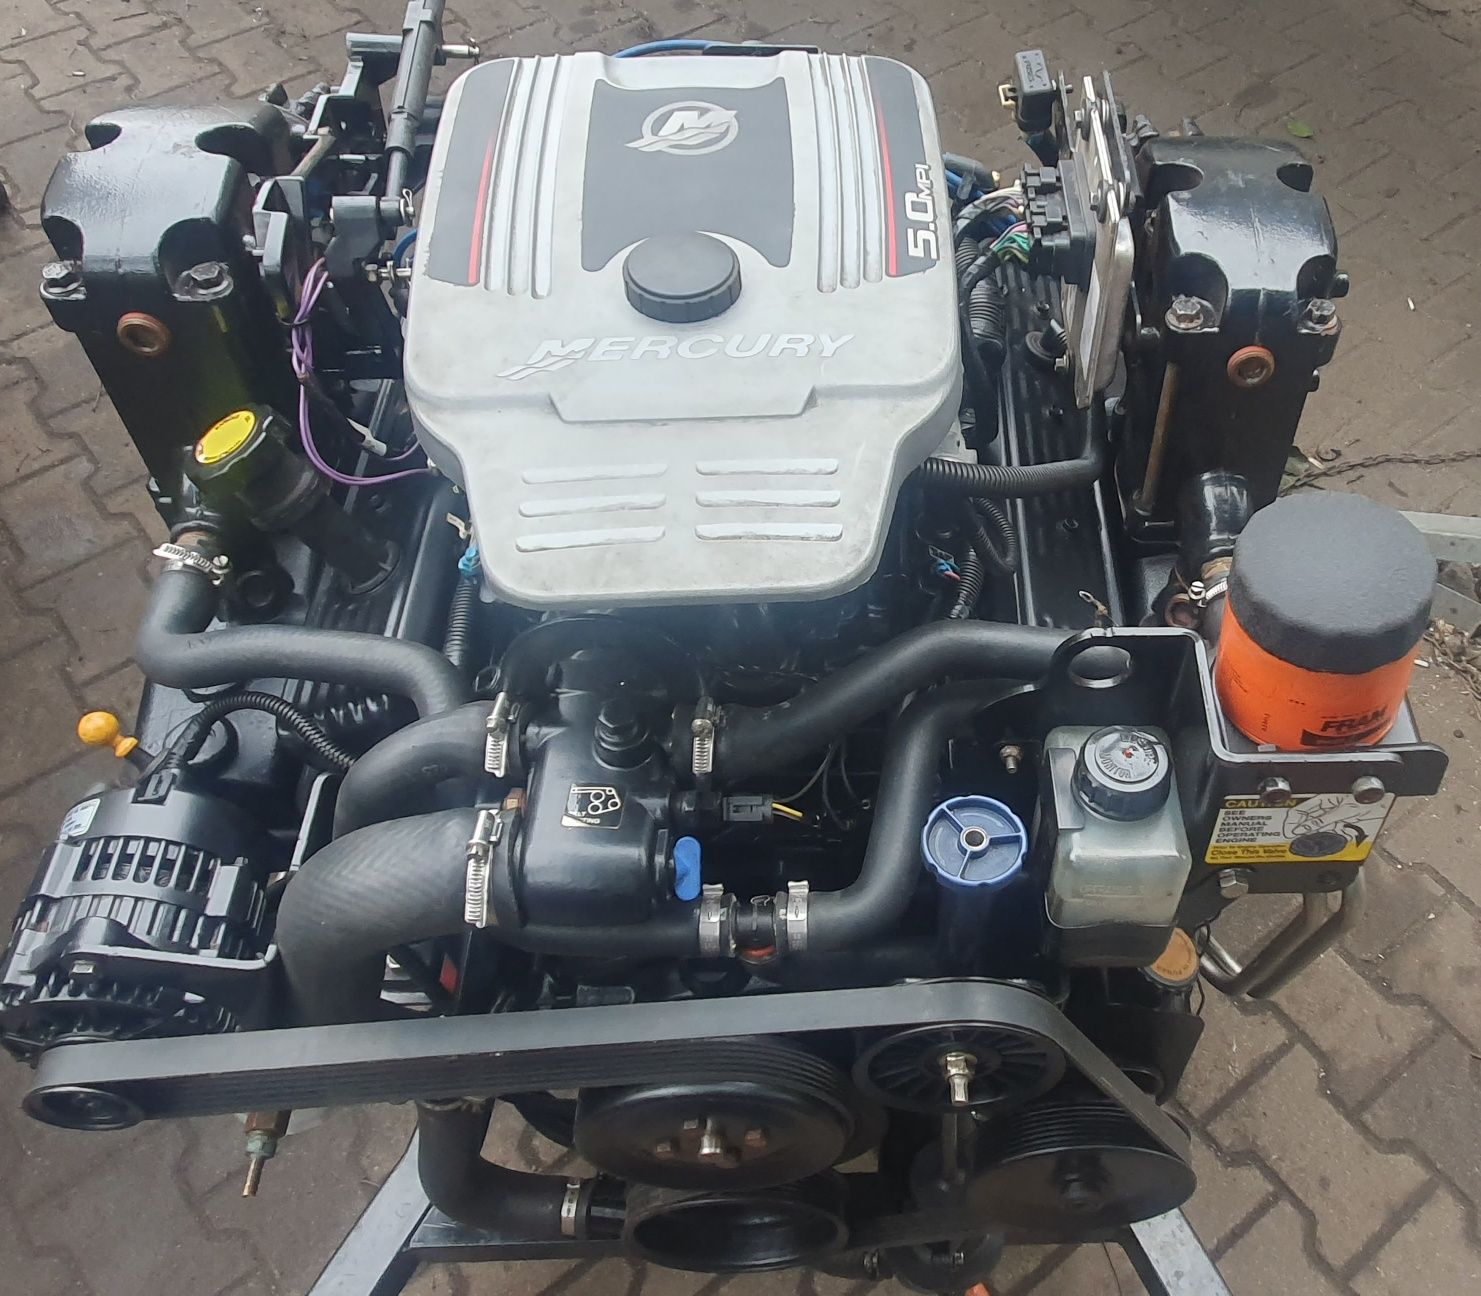 Silnik Mercury Mercruiser 5.0 MPI / wielopunktowy wtrysk paliwa